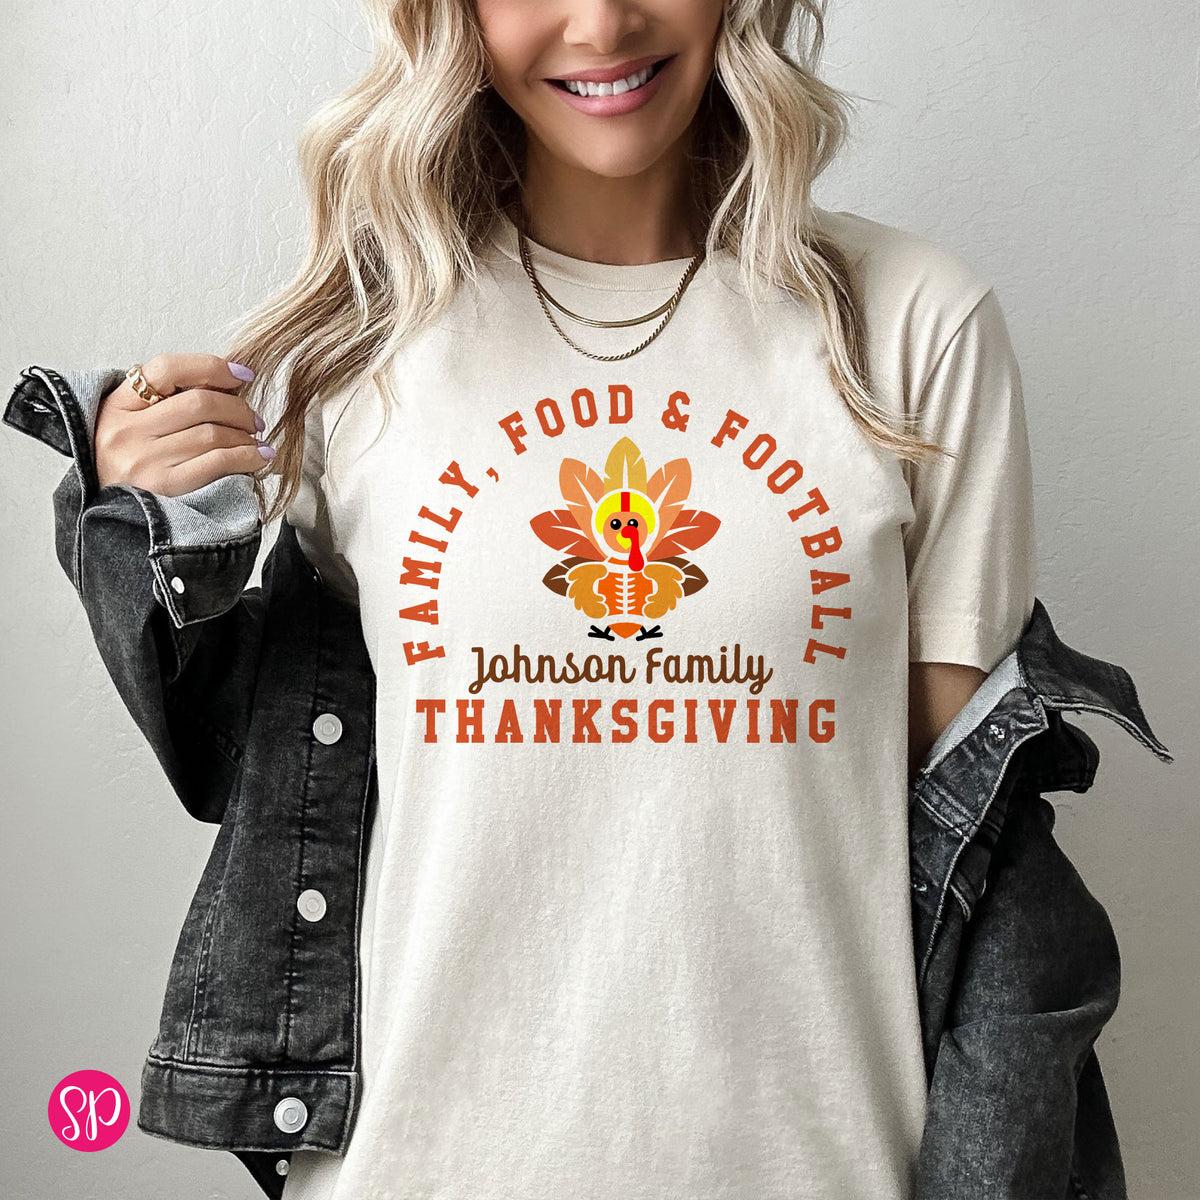 Family, Food, Football with Custom Family Name Unisex T-Shirt